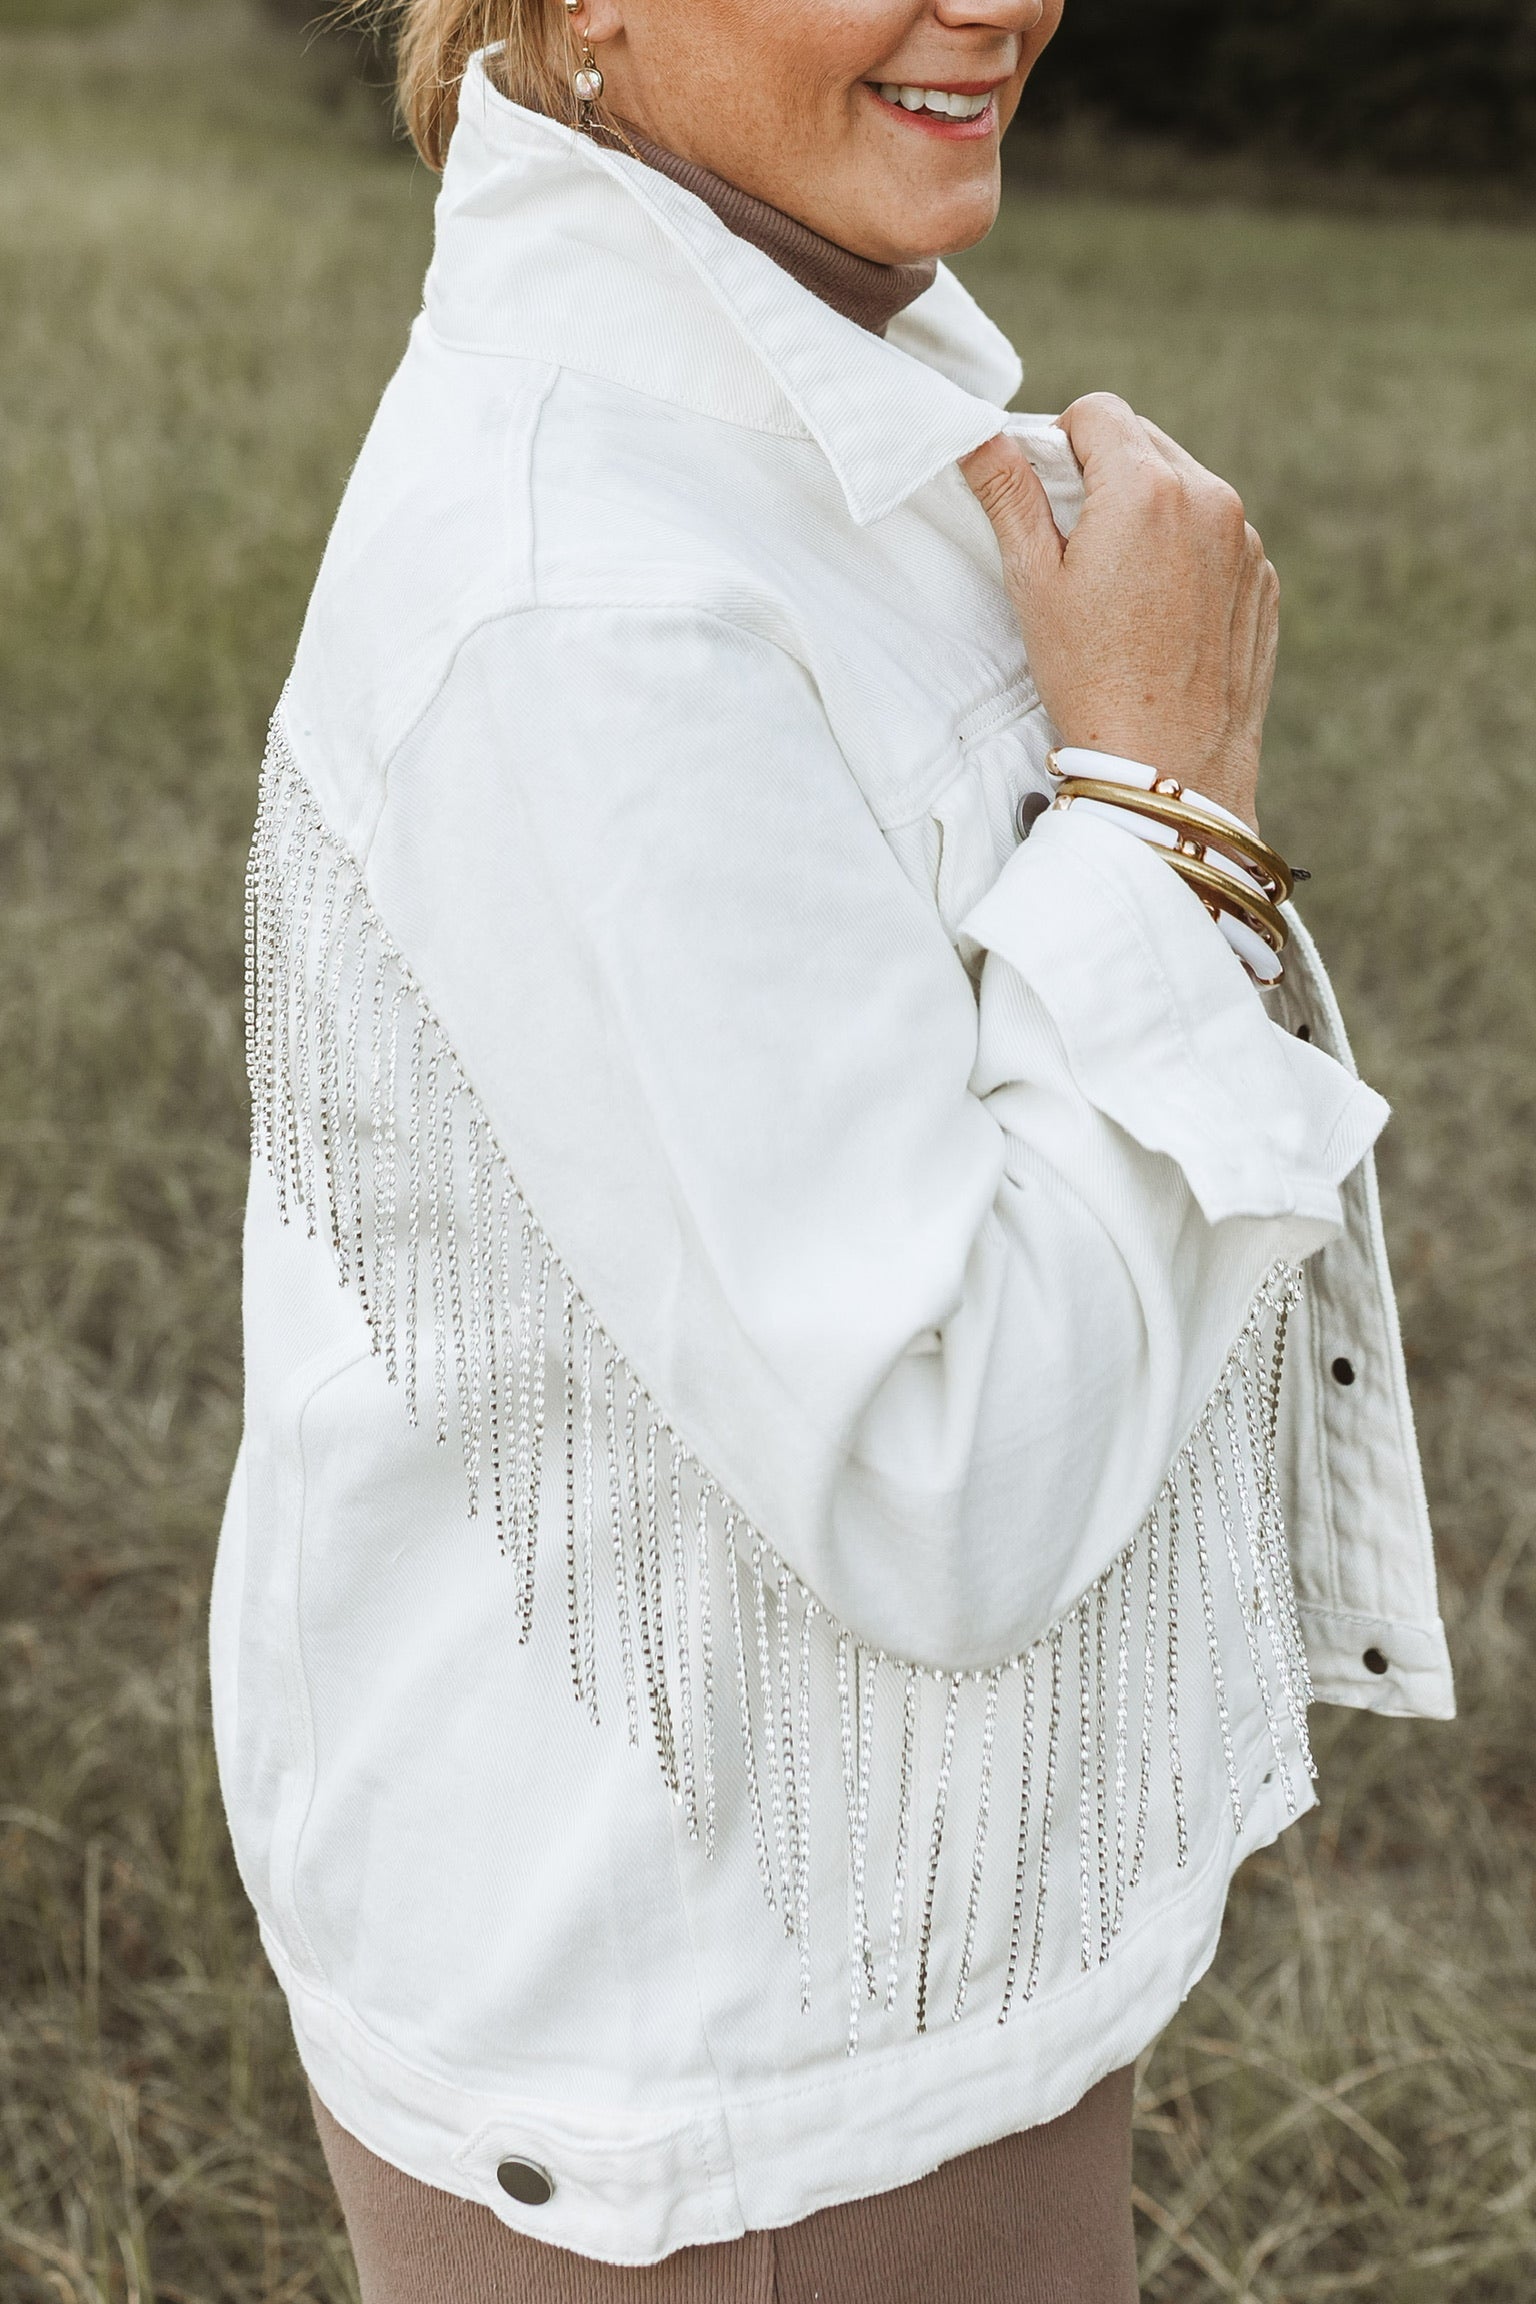 Rhinestone Cowgirl Crystal Fringe Denim Jacket in White - Giddy Up Glamour Boutique